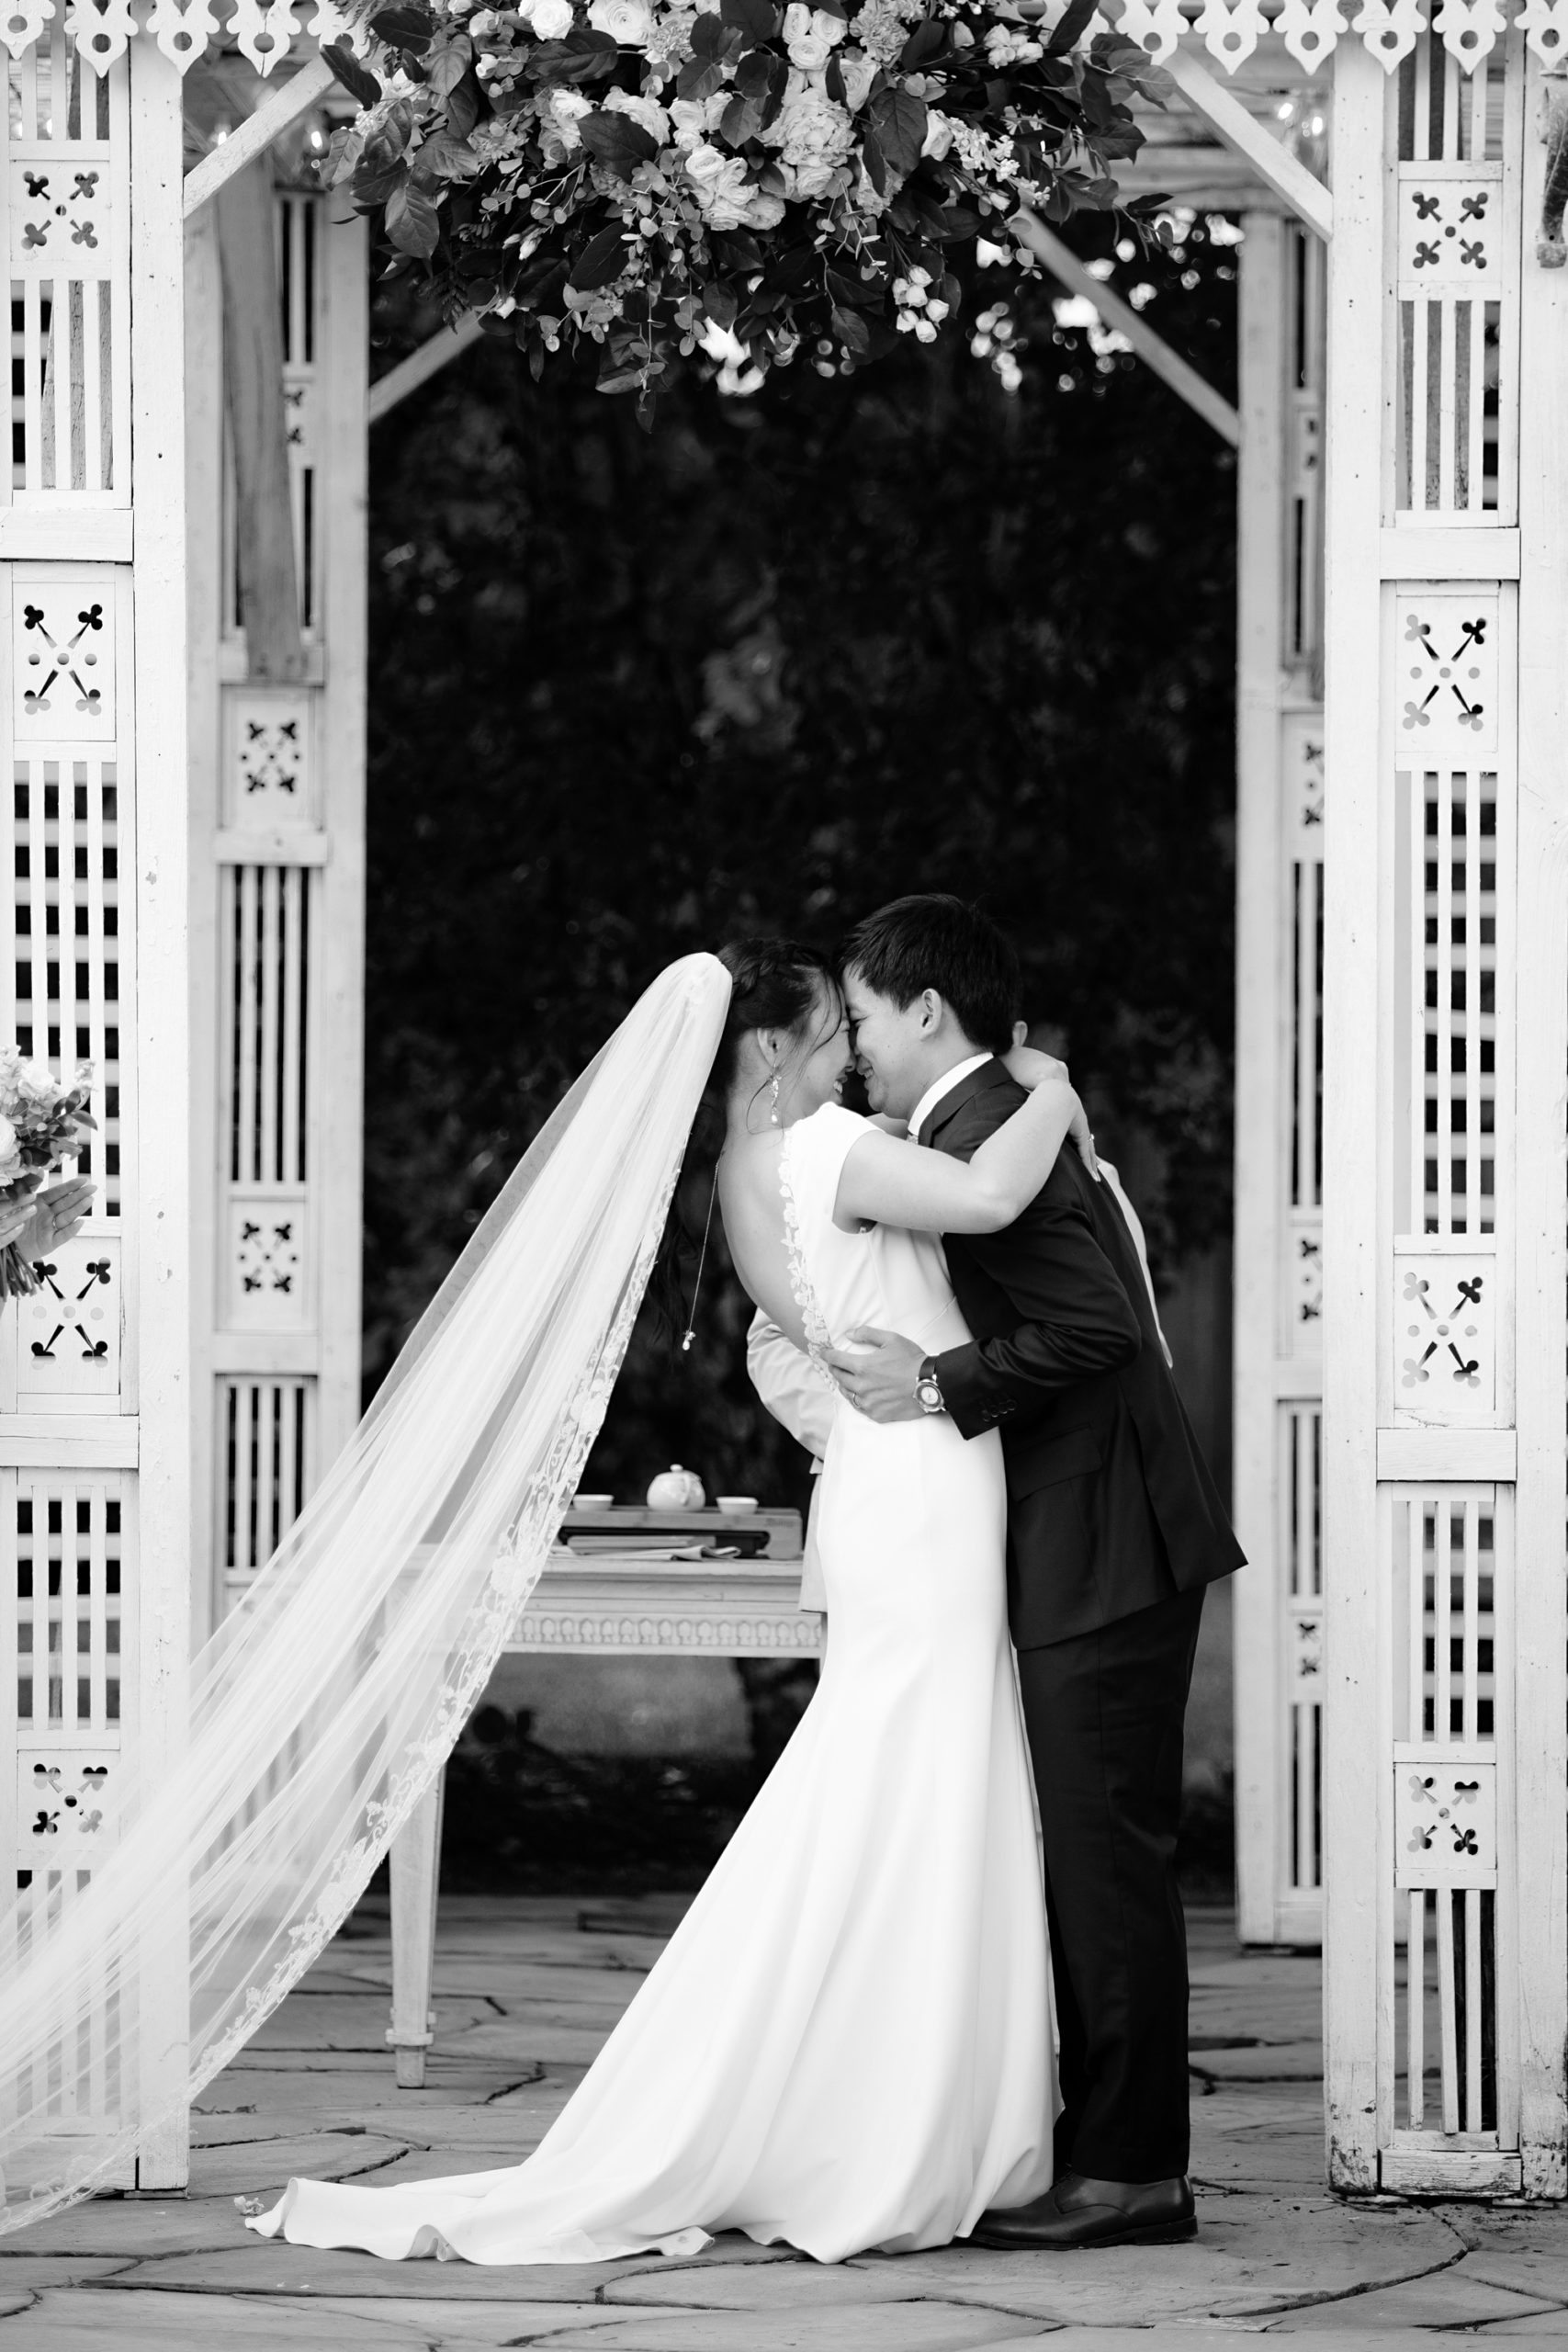 Terrain at Styers Wedding, Philadelphia Wedding, Philadelphia Wedding Photographer